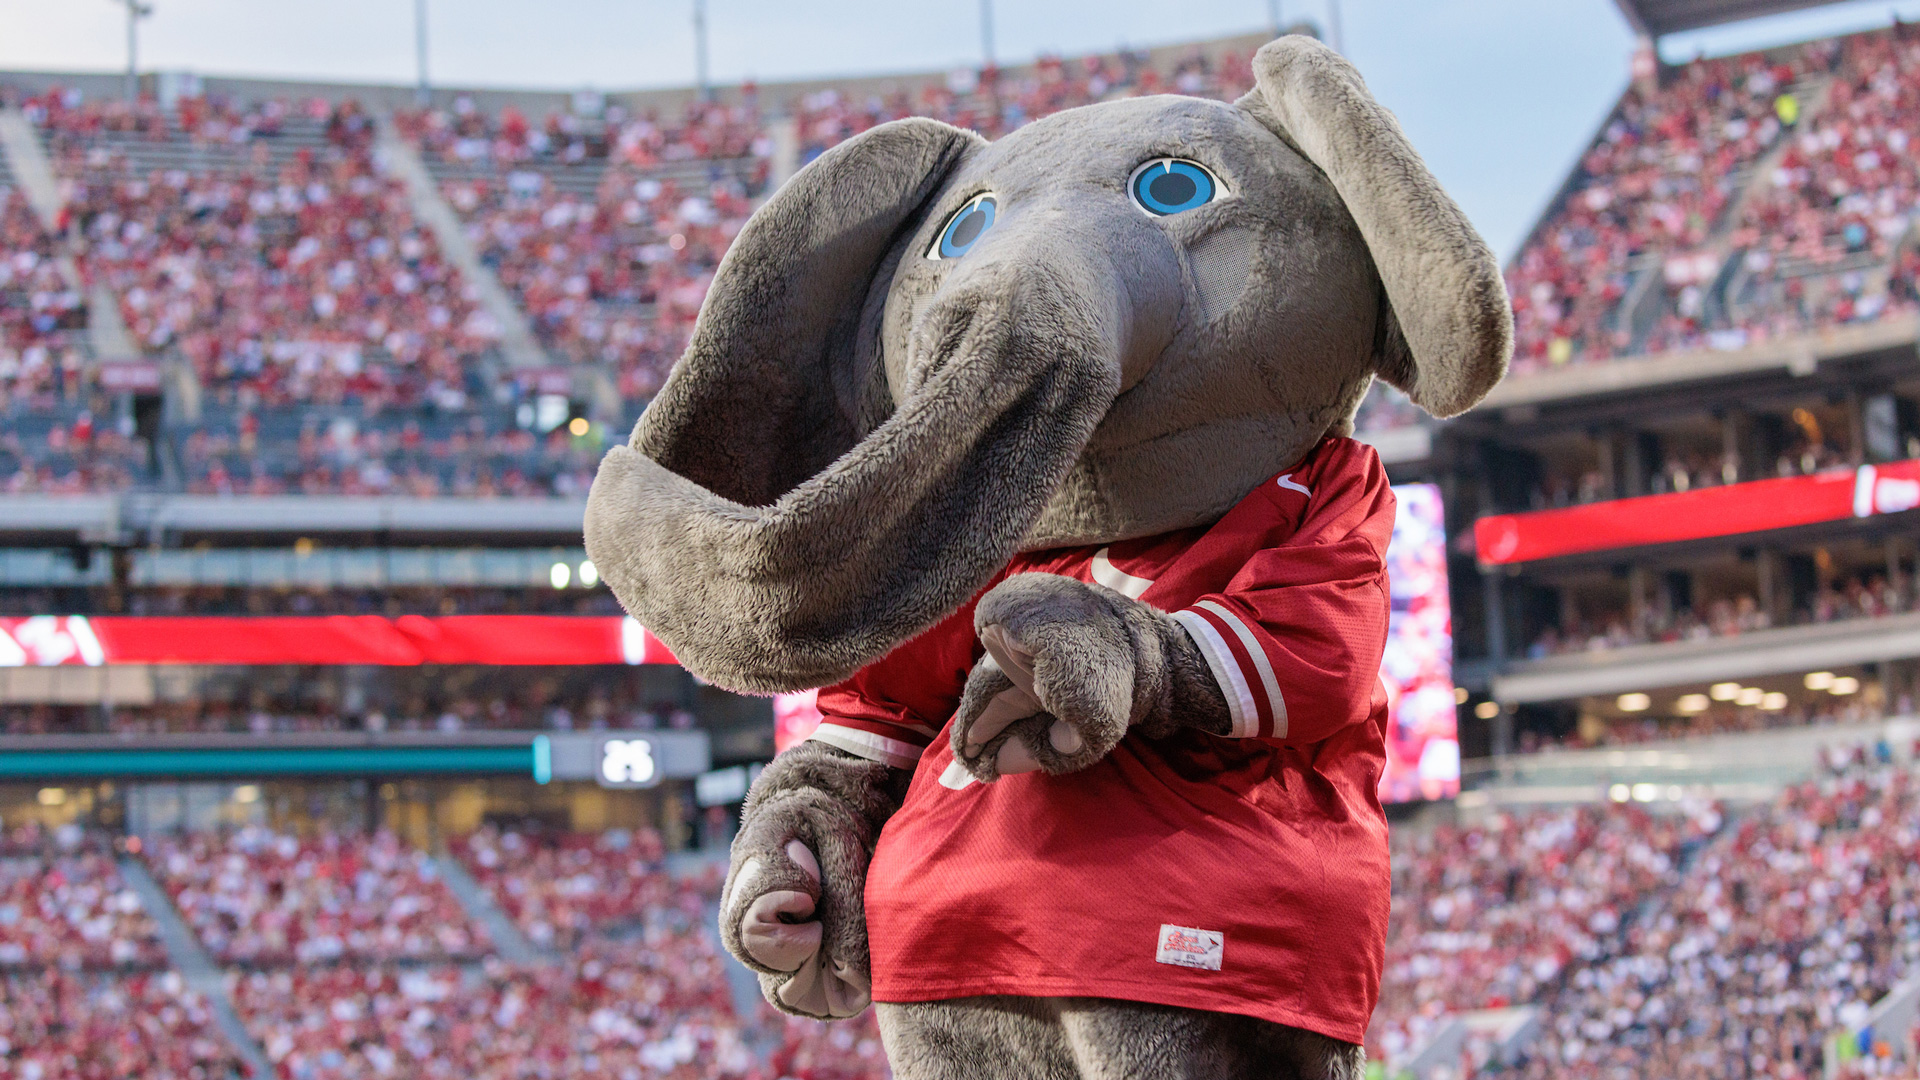 The story behind Alabama's elephant mascot